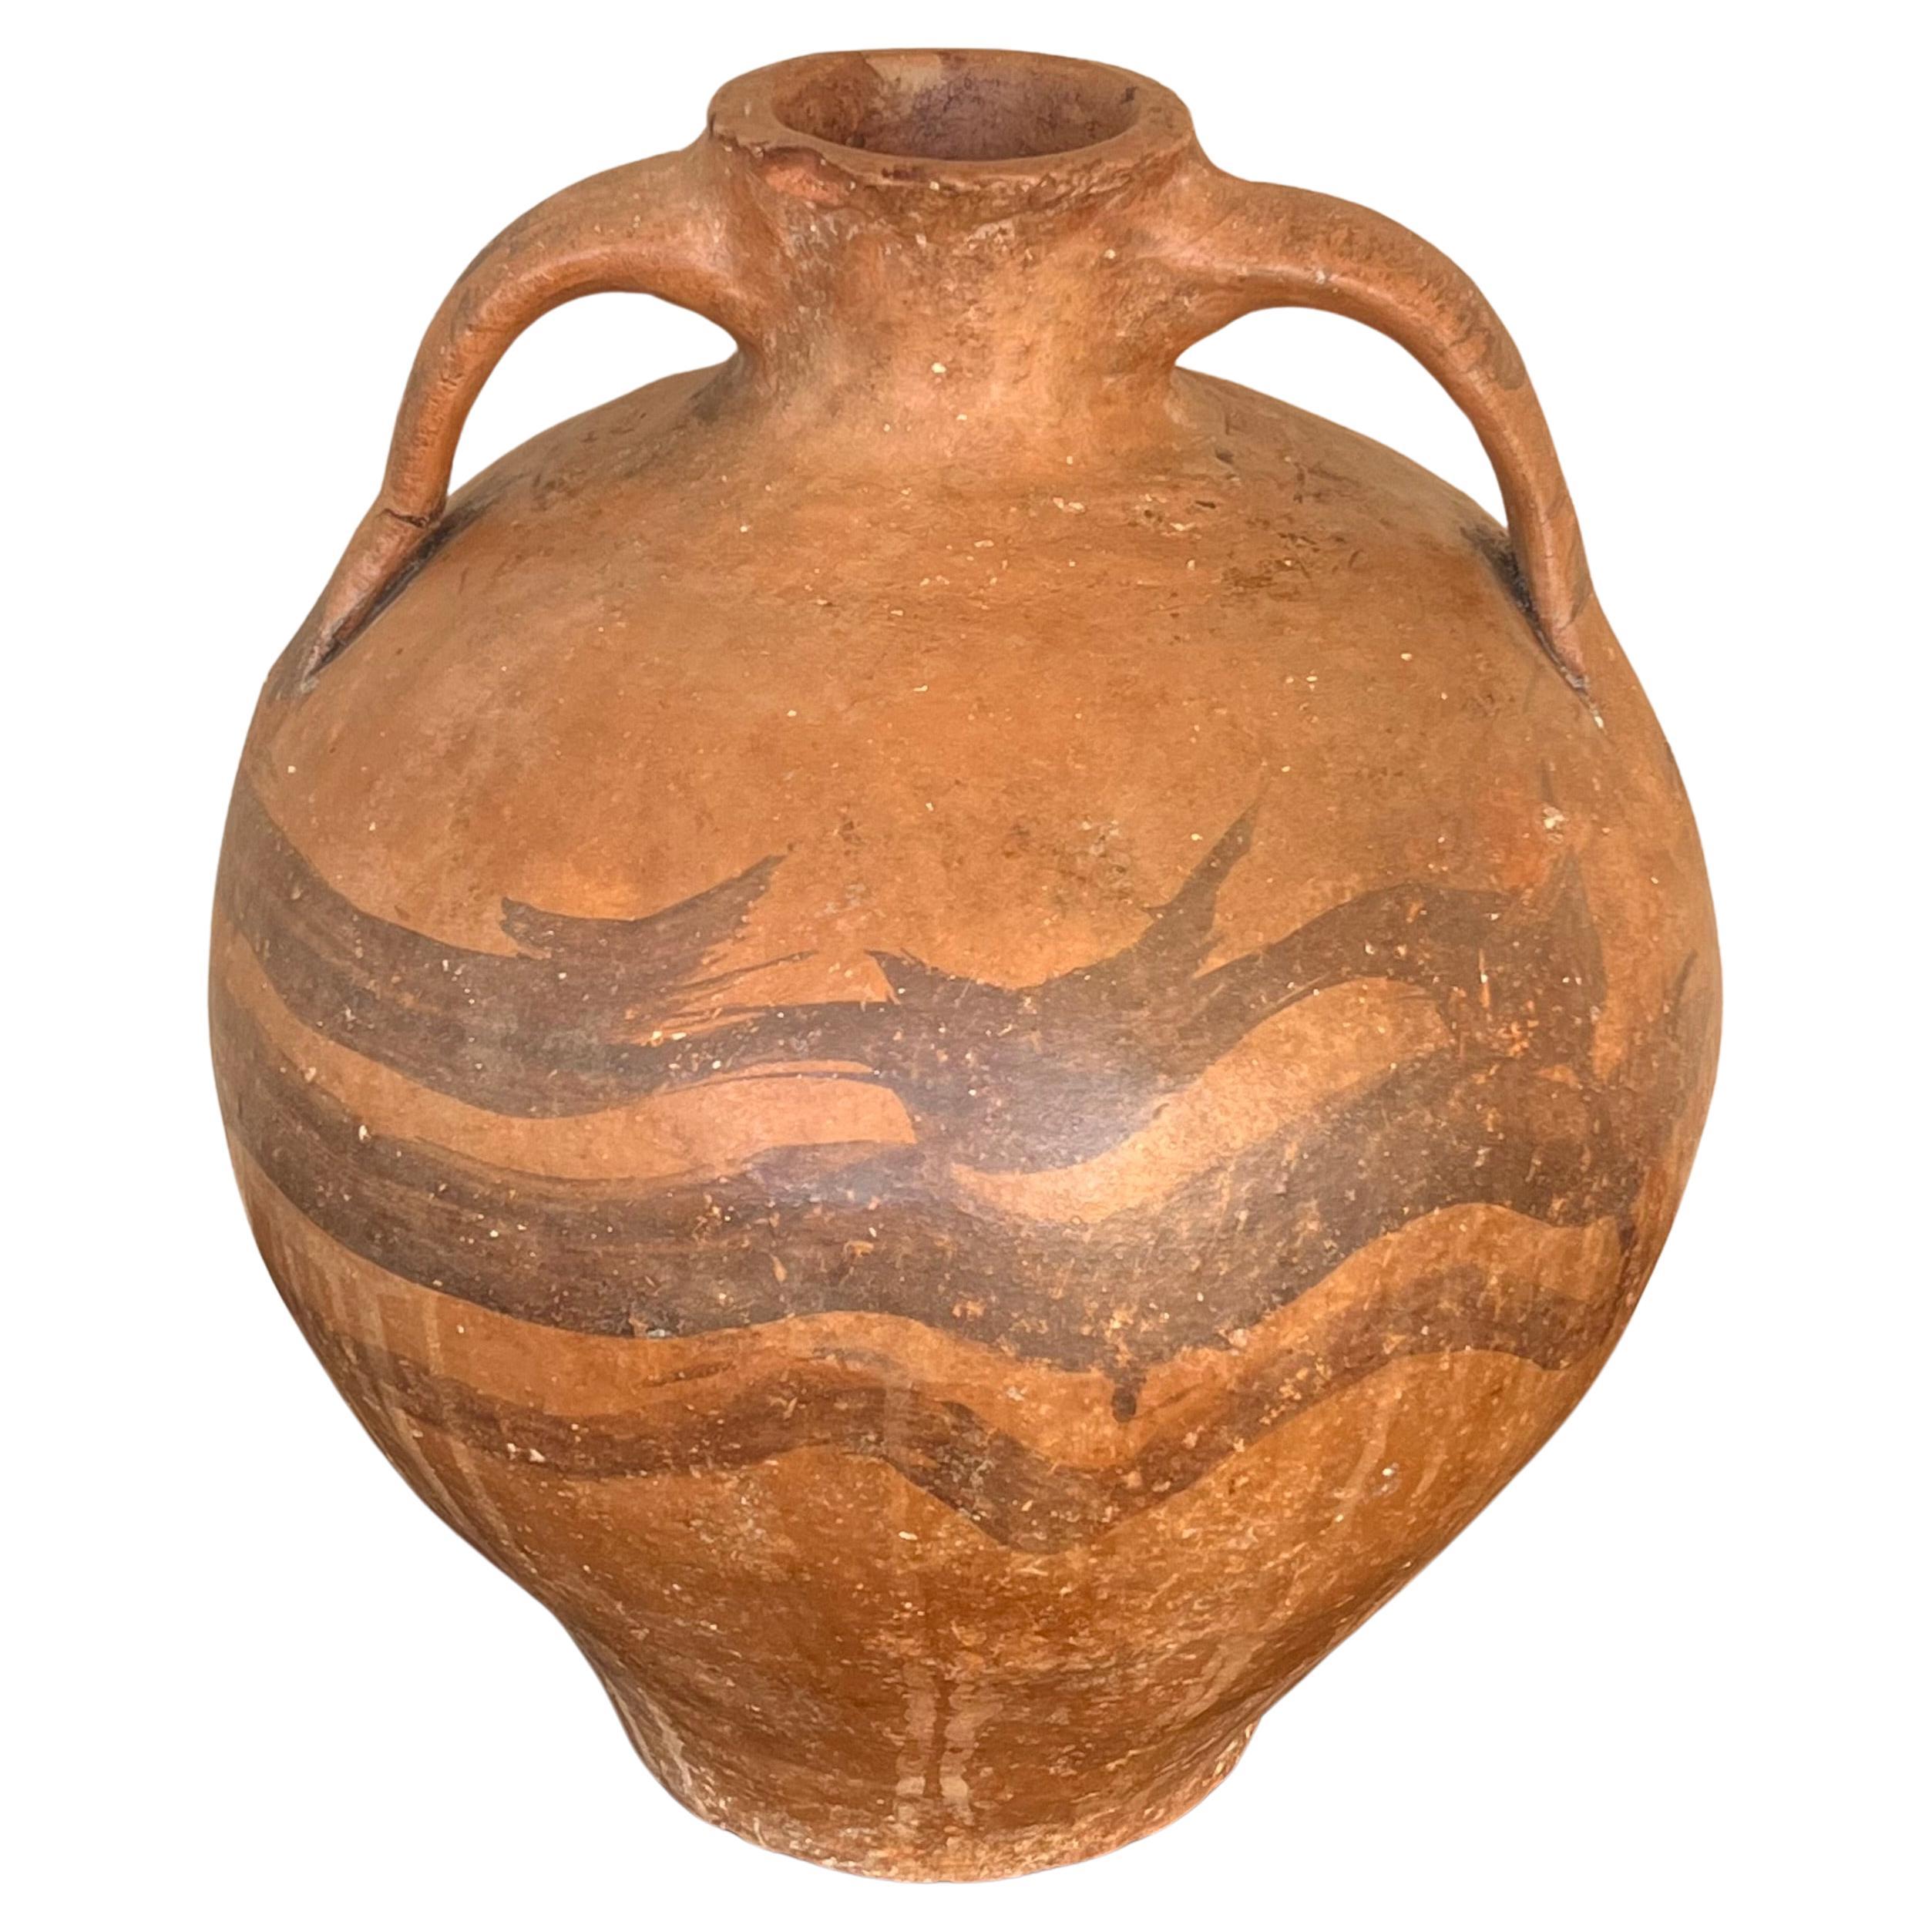 Brautkrug-Vase „Cantaro“ aus Calanda, Spanien, Terrakotta-Vase, 18. Jahrhundert